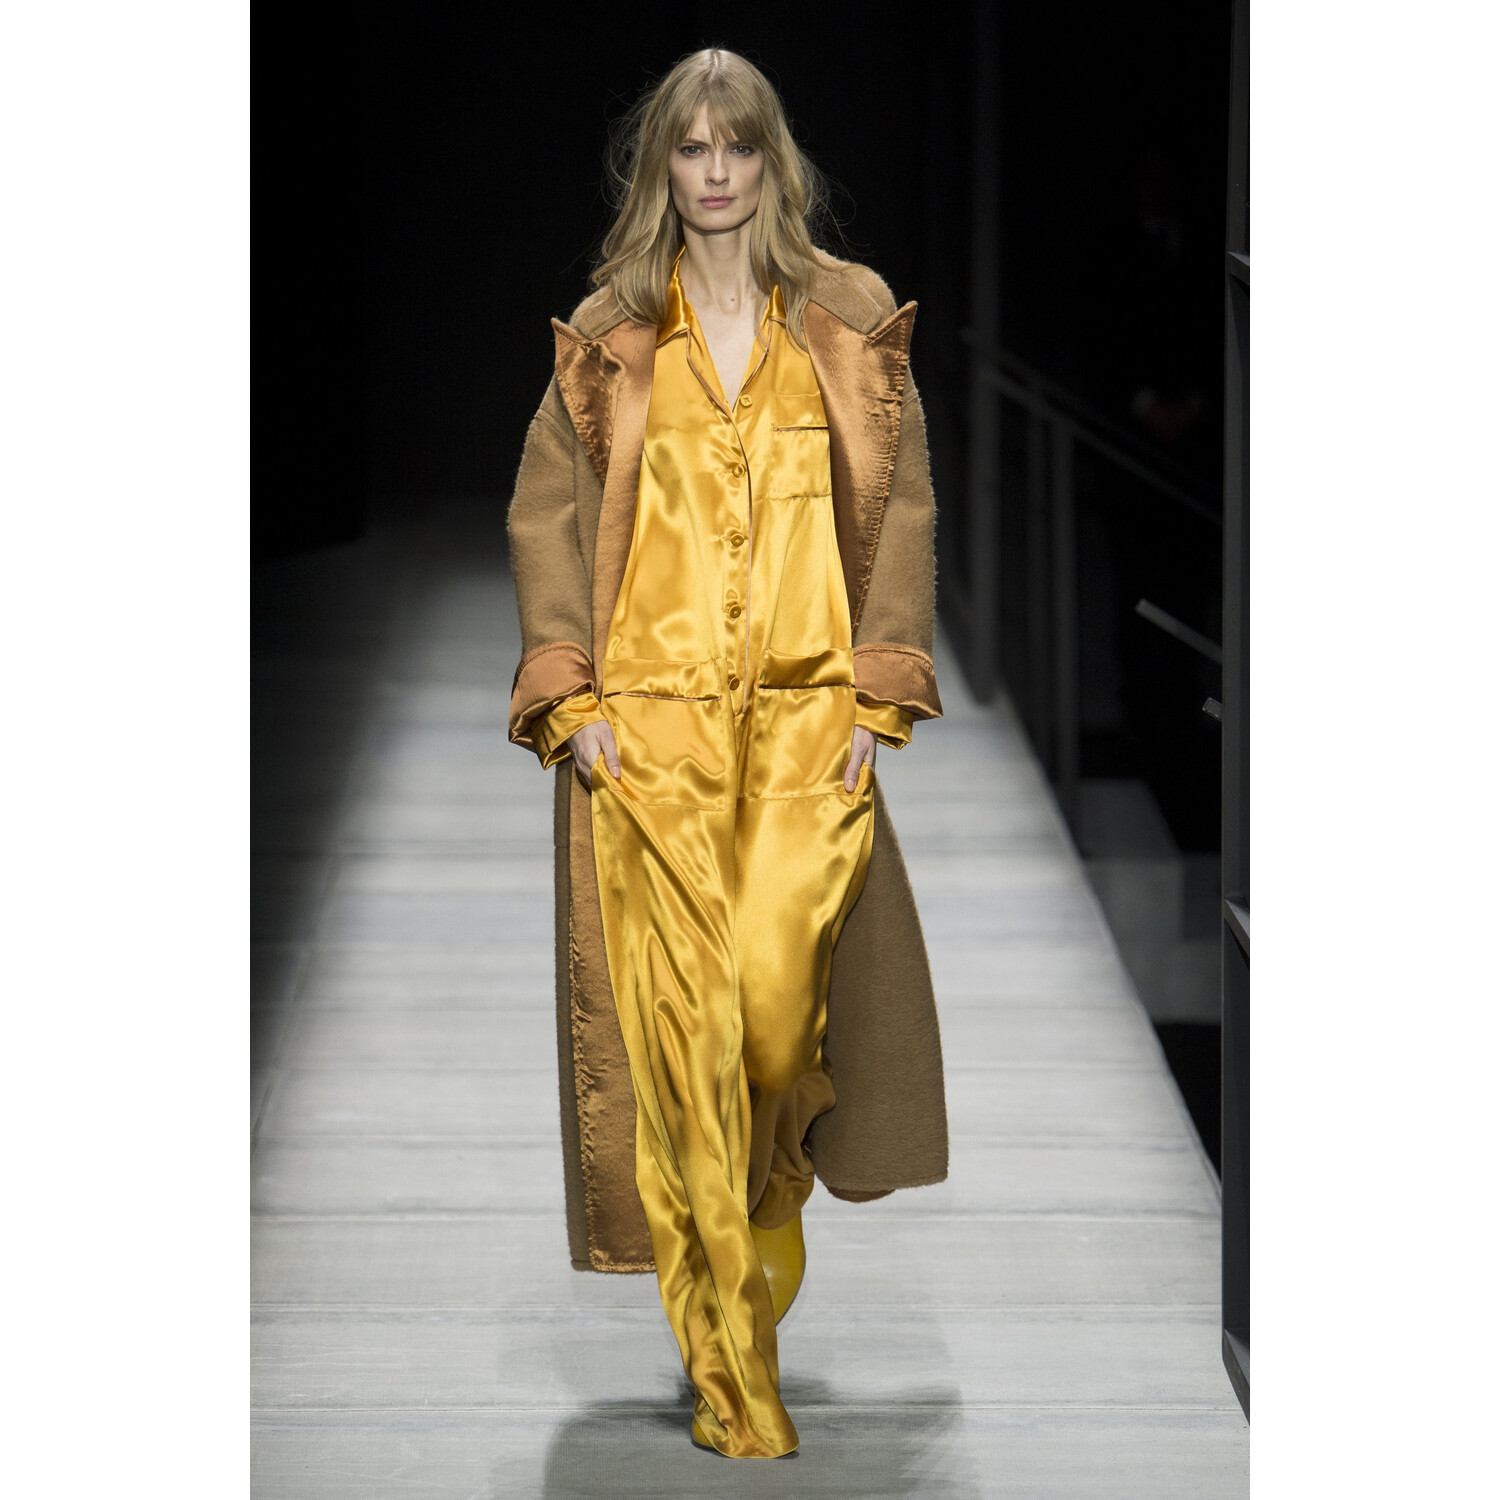 Фото Bottega Veneta  Fall 2018 Ready-to-Wear Боттега Венета осень зима 2018 коллекция неделя моды в Нью Йорке Mainstyles